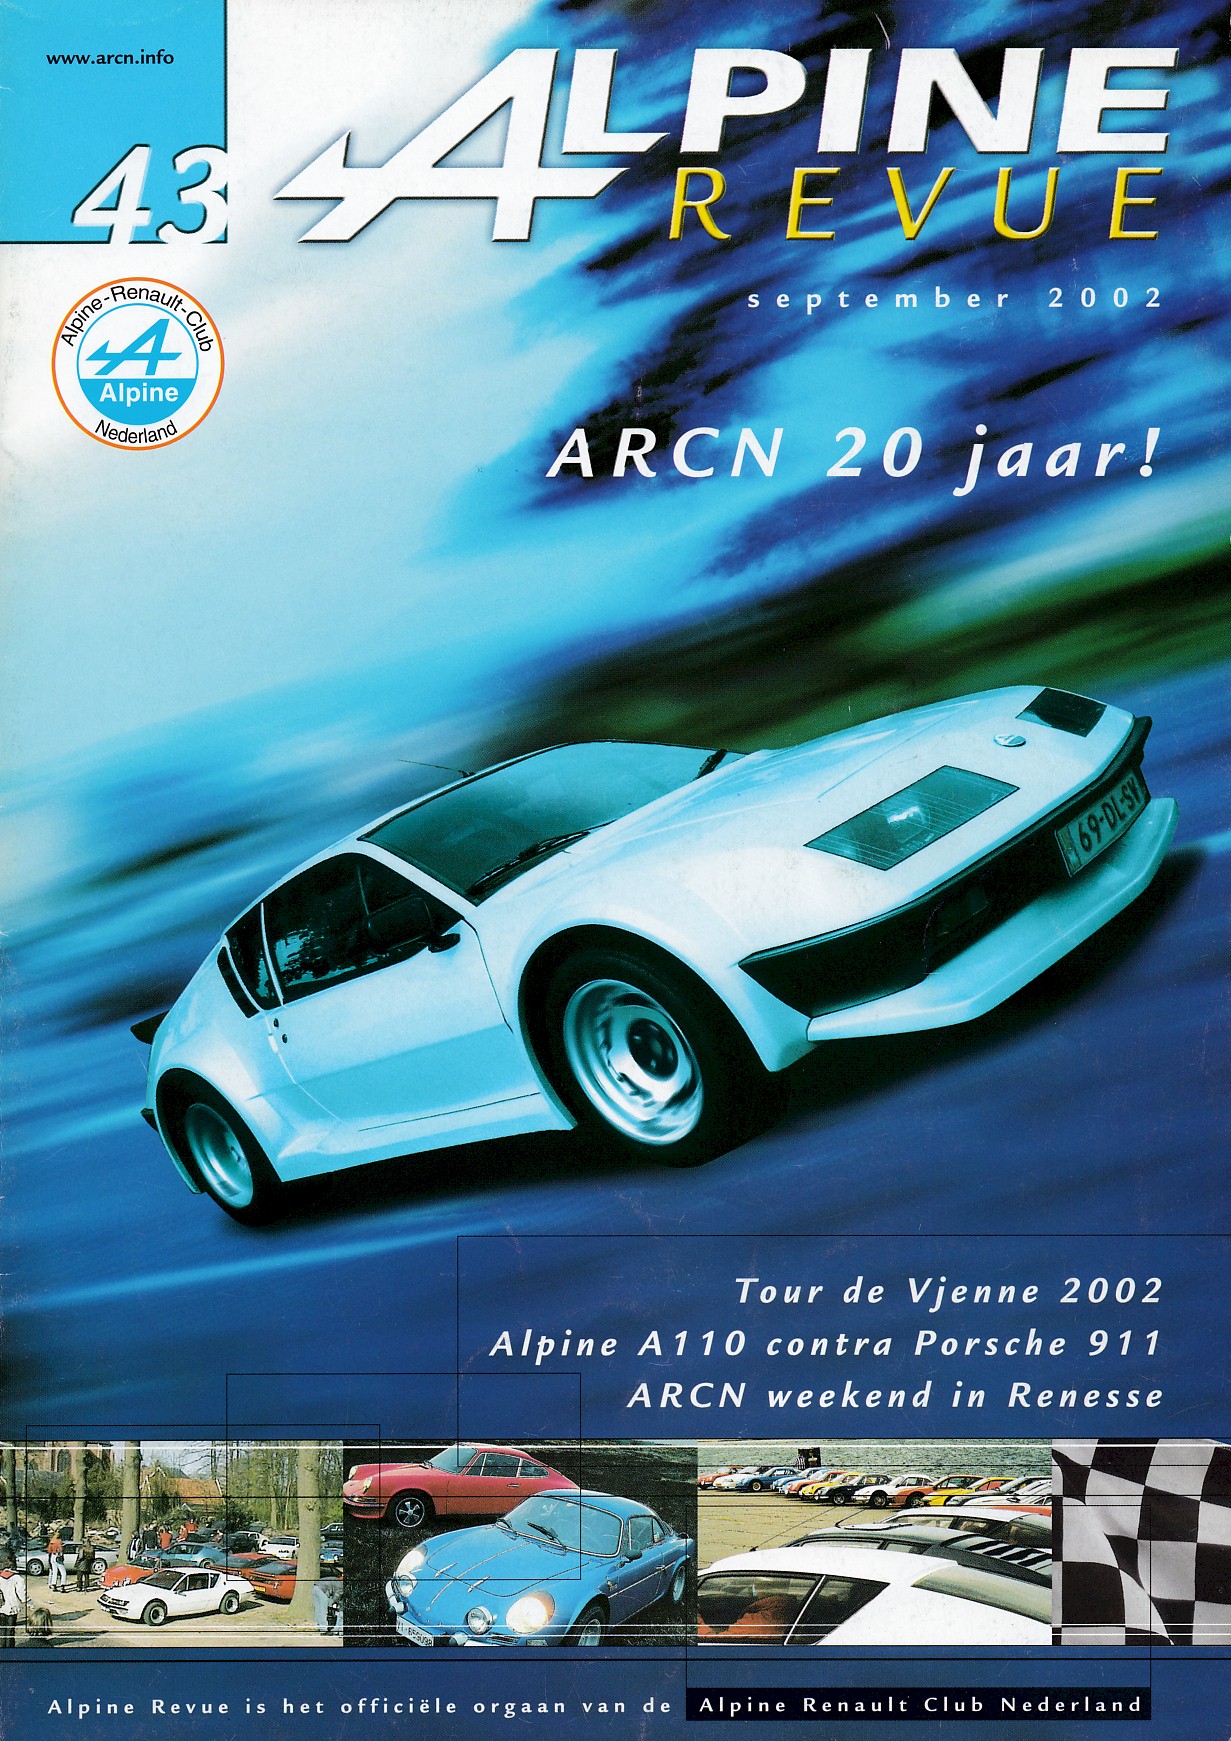 Revue, Alpine - Clubblad van de ARCN (Alpine Renault Club Nederland), nummer-43, september 2002